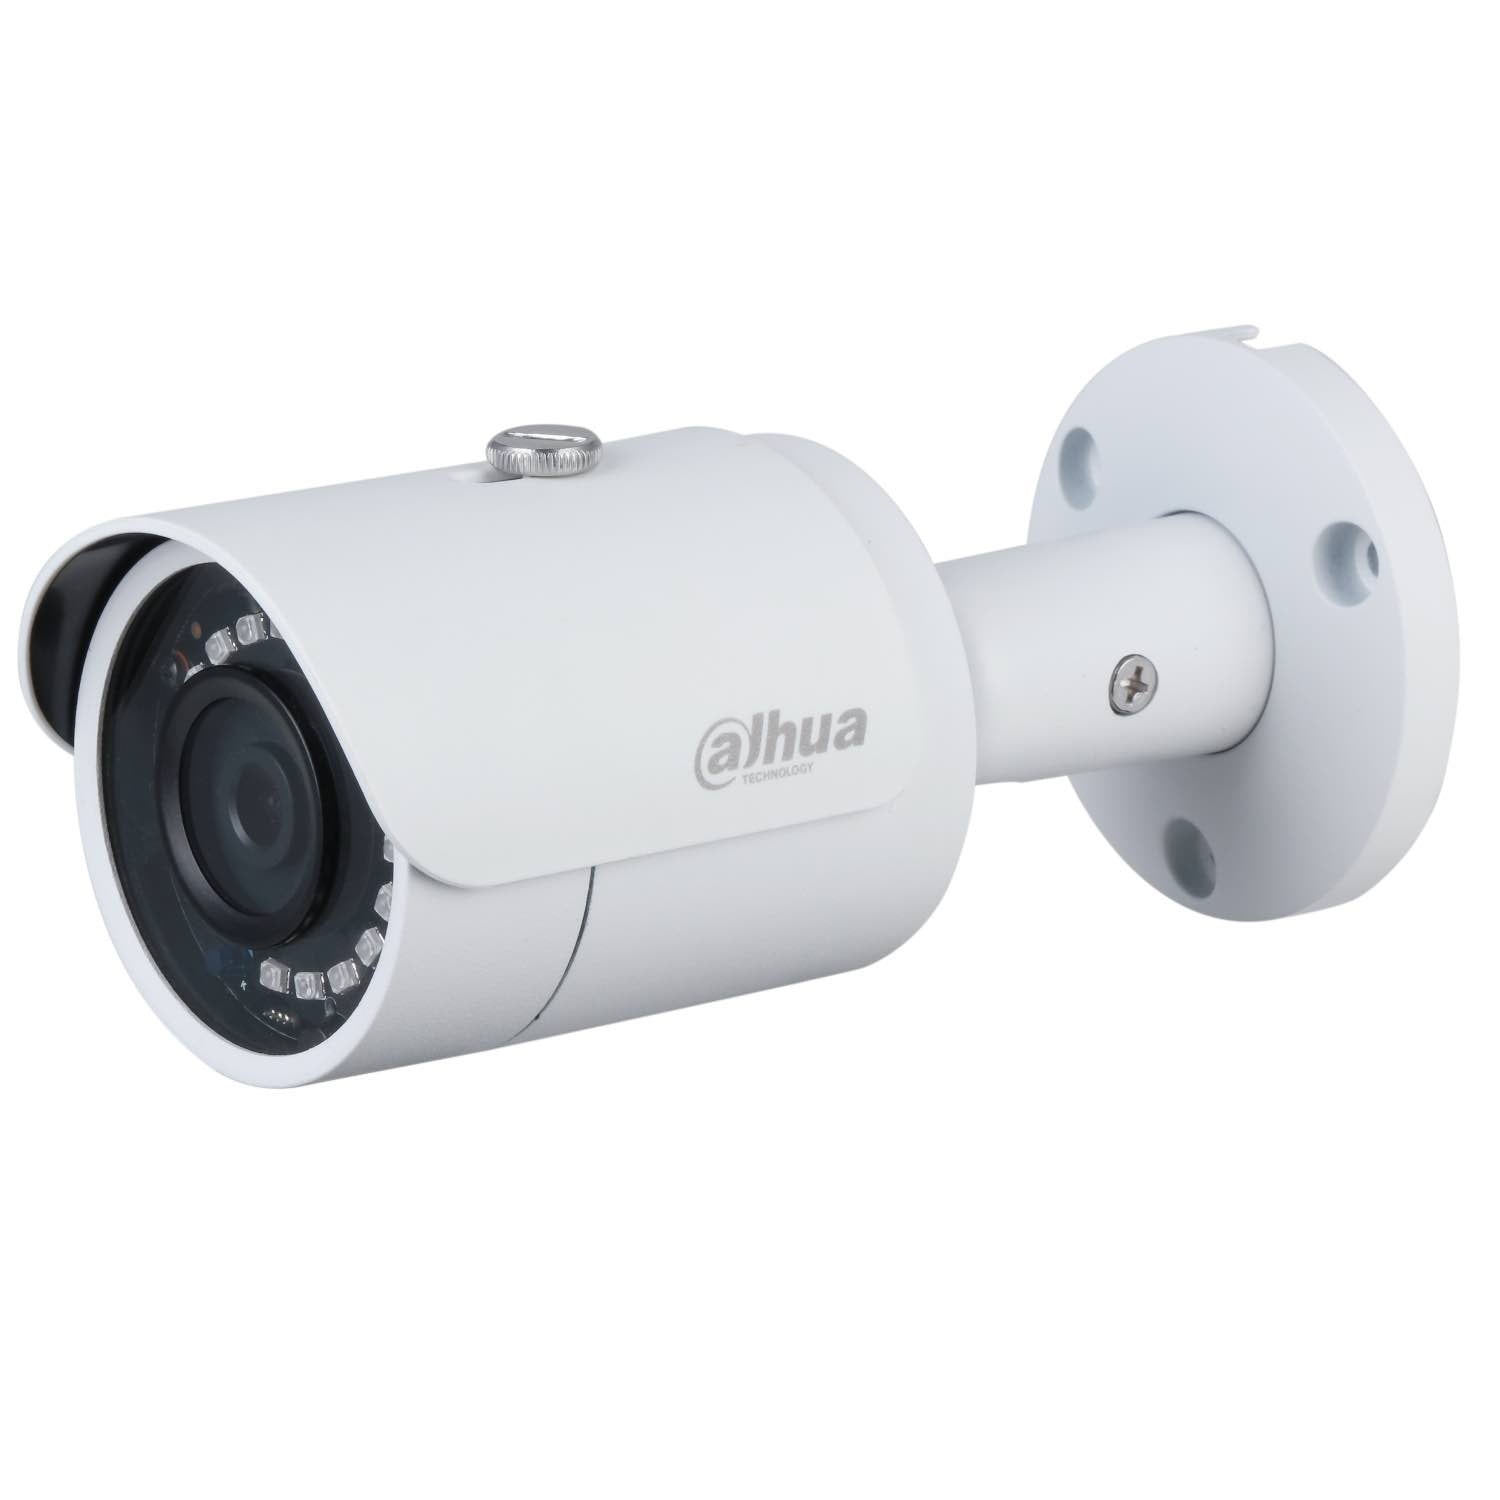 Dahua 3MP IP Network Bullet Camera DH-IPC-HFW1330SP-S4